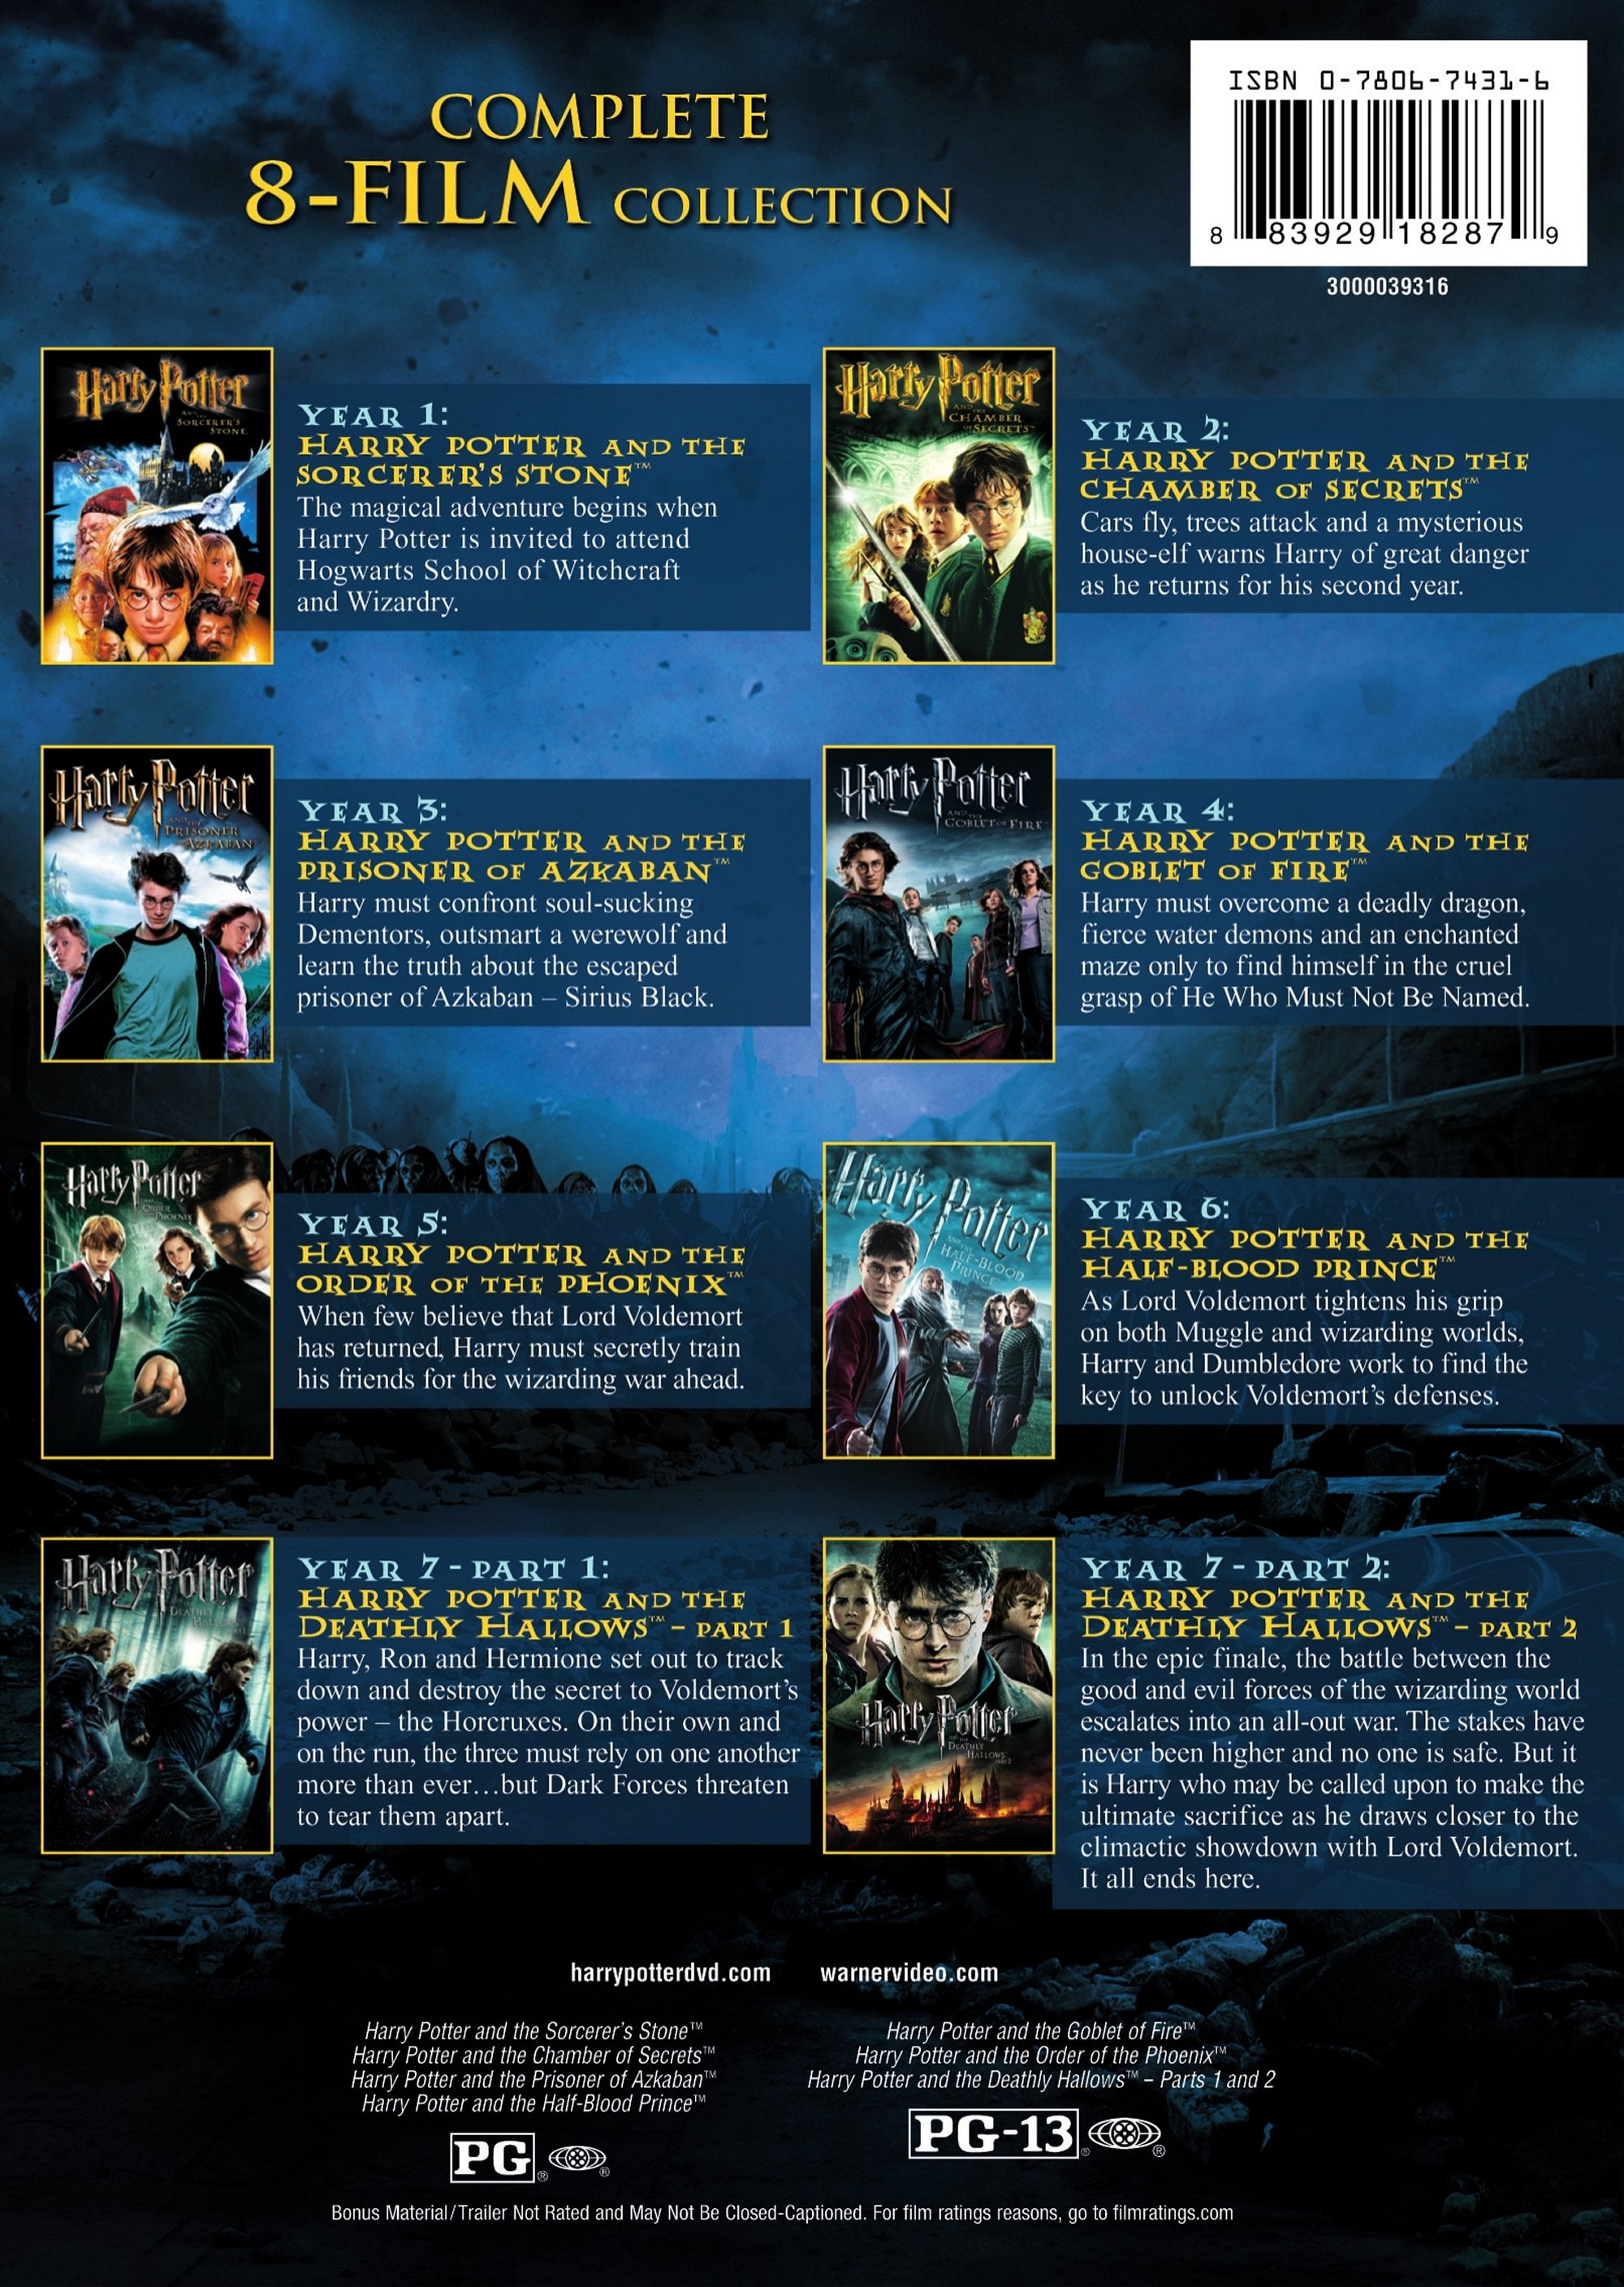 Harry Potter: Complete 8-Film Collection (Adventure) (Warner Pictures) - Walmart.com